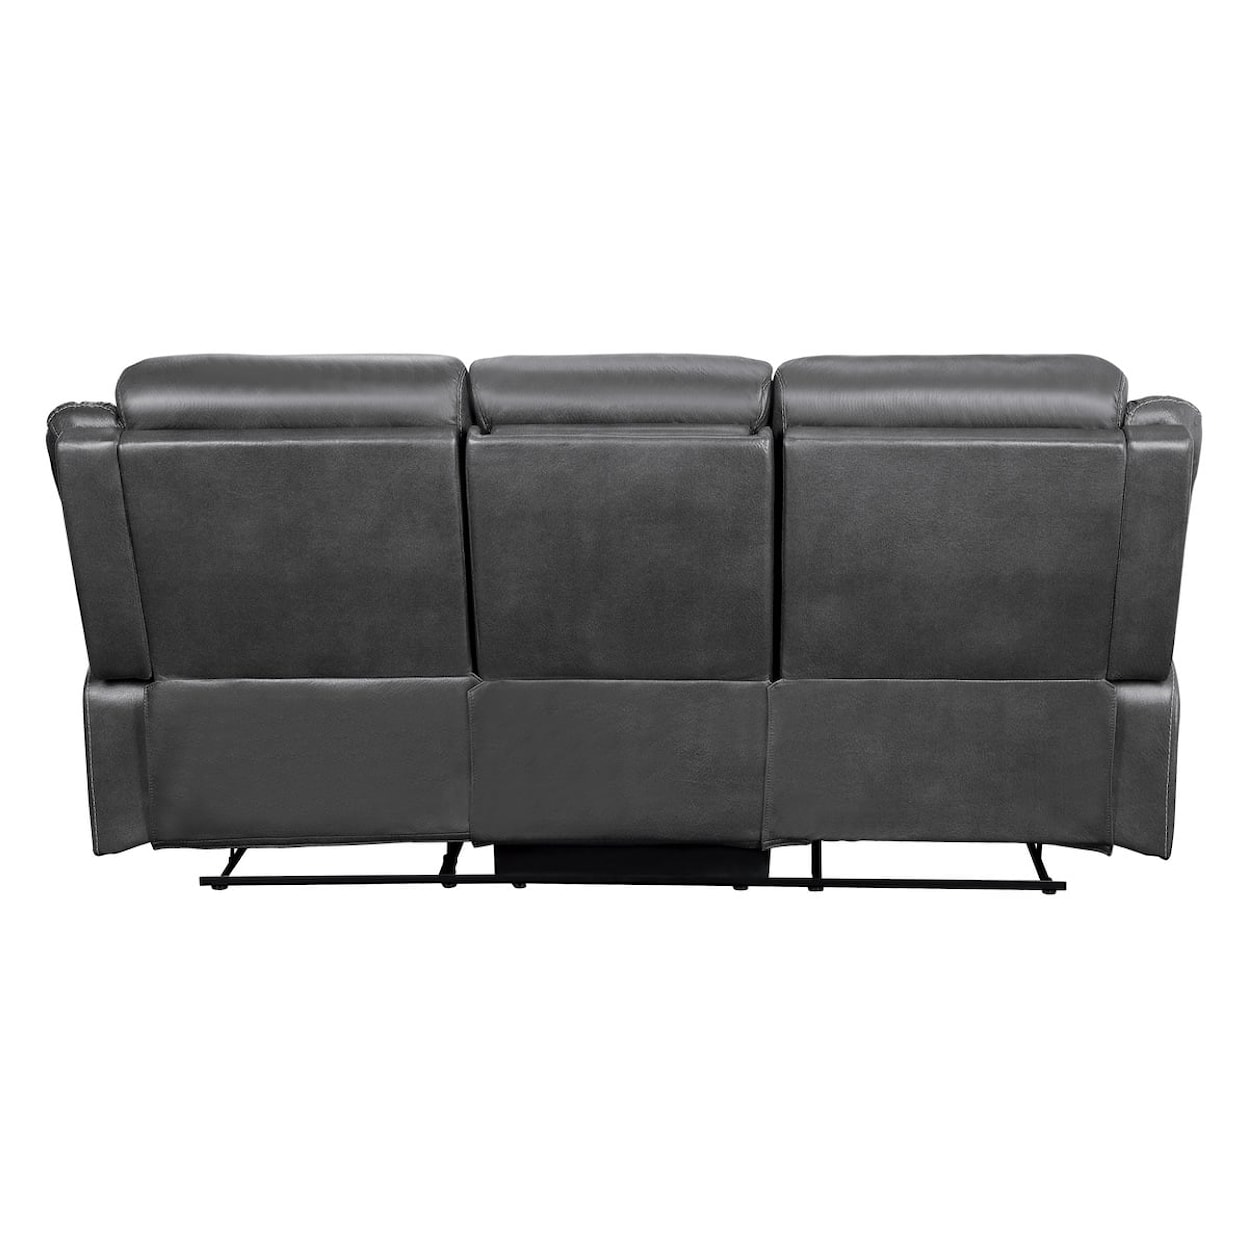 Homelegance Furniture Yerba Lay Flat Reclining Sofa